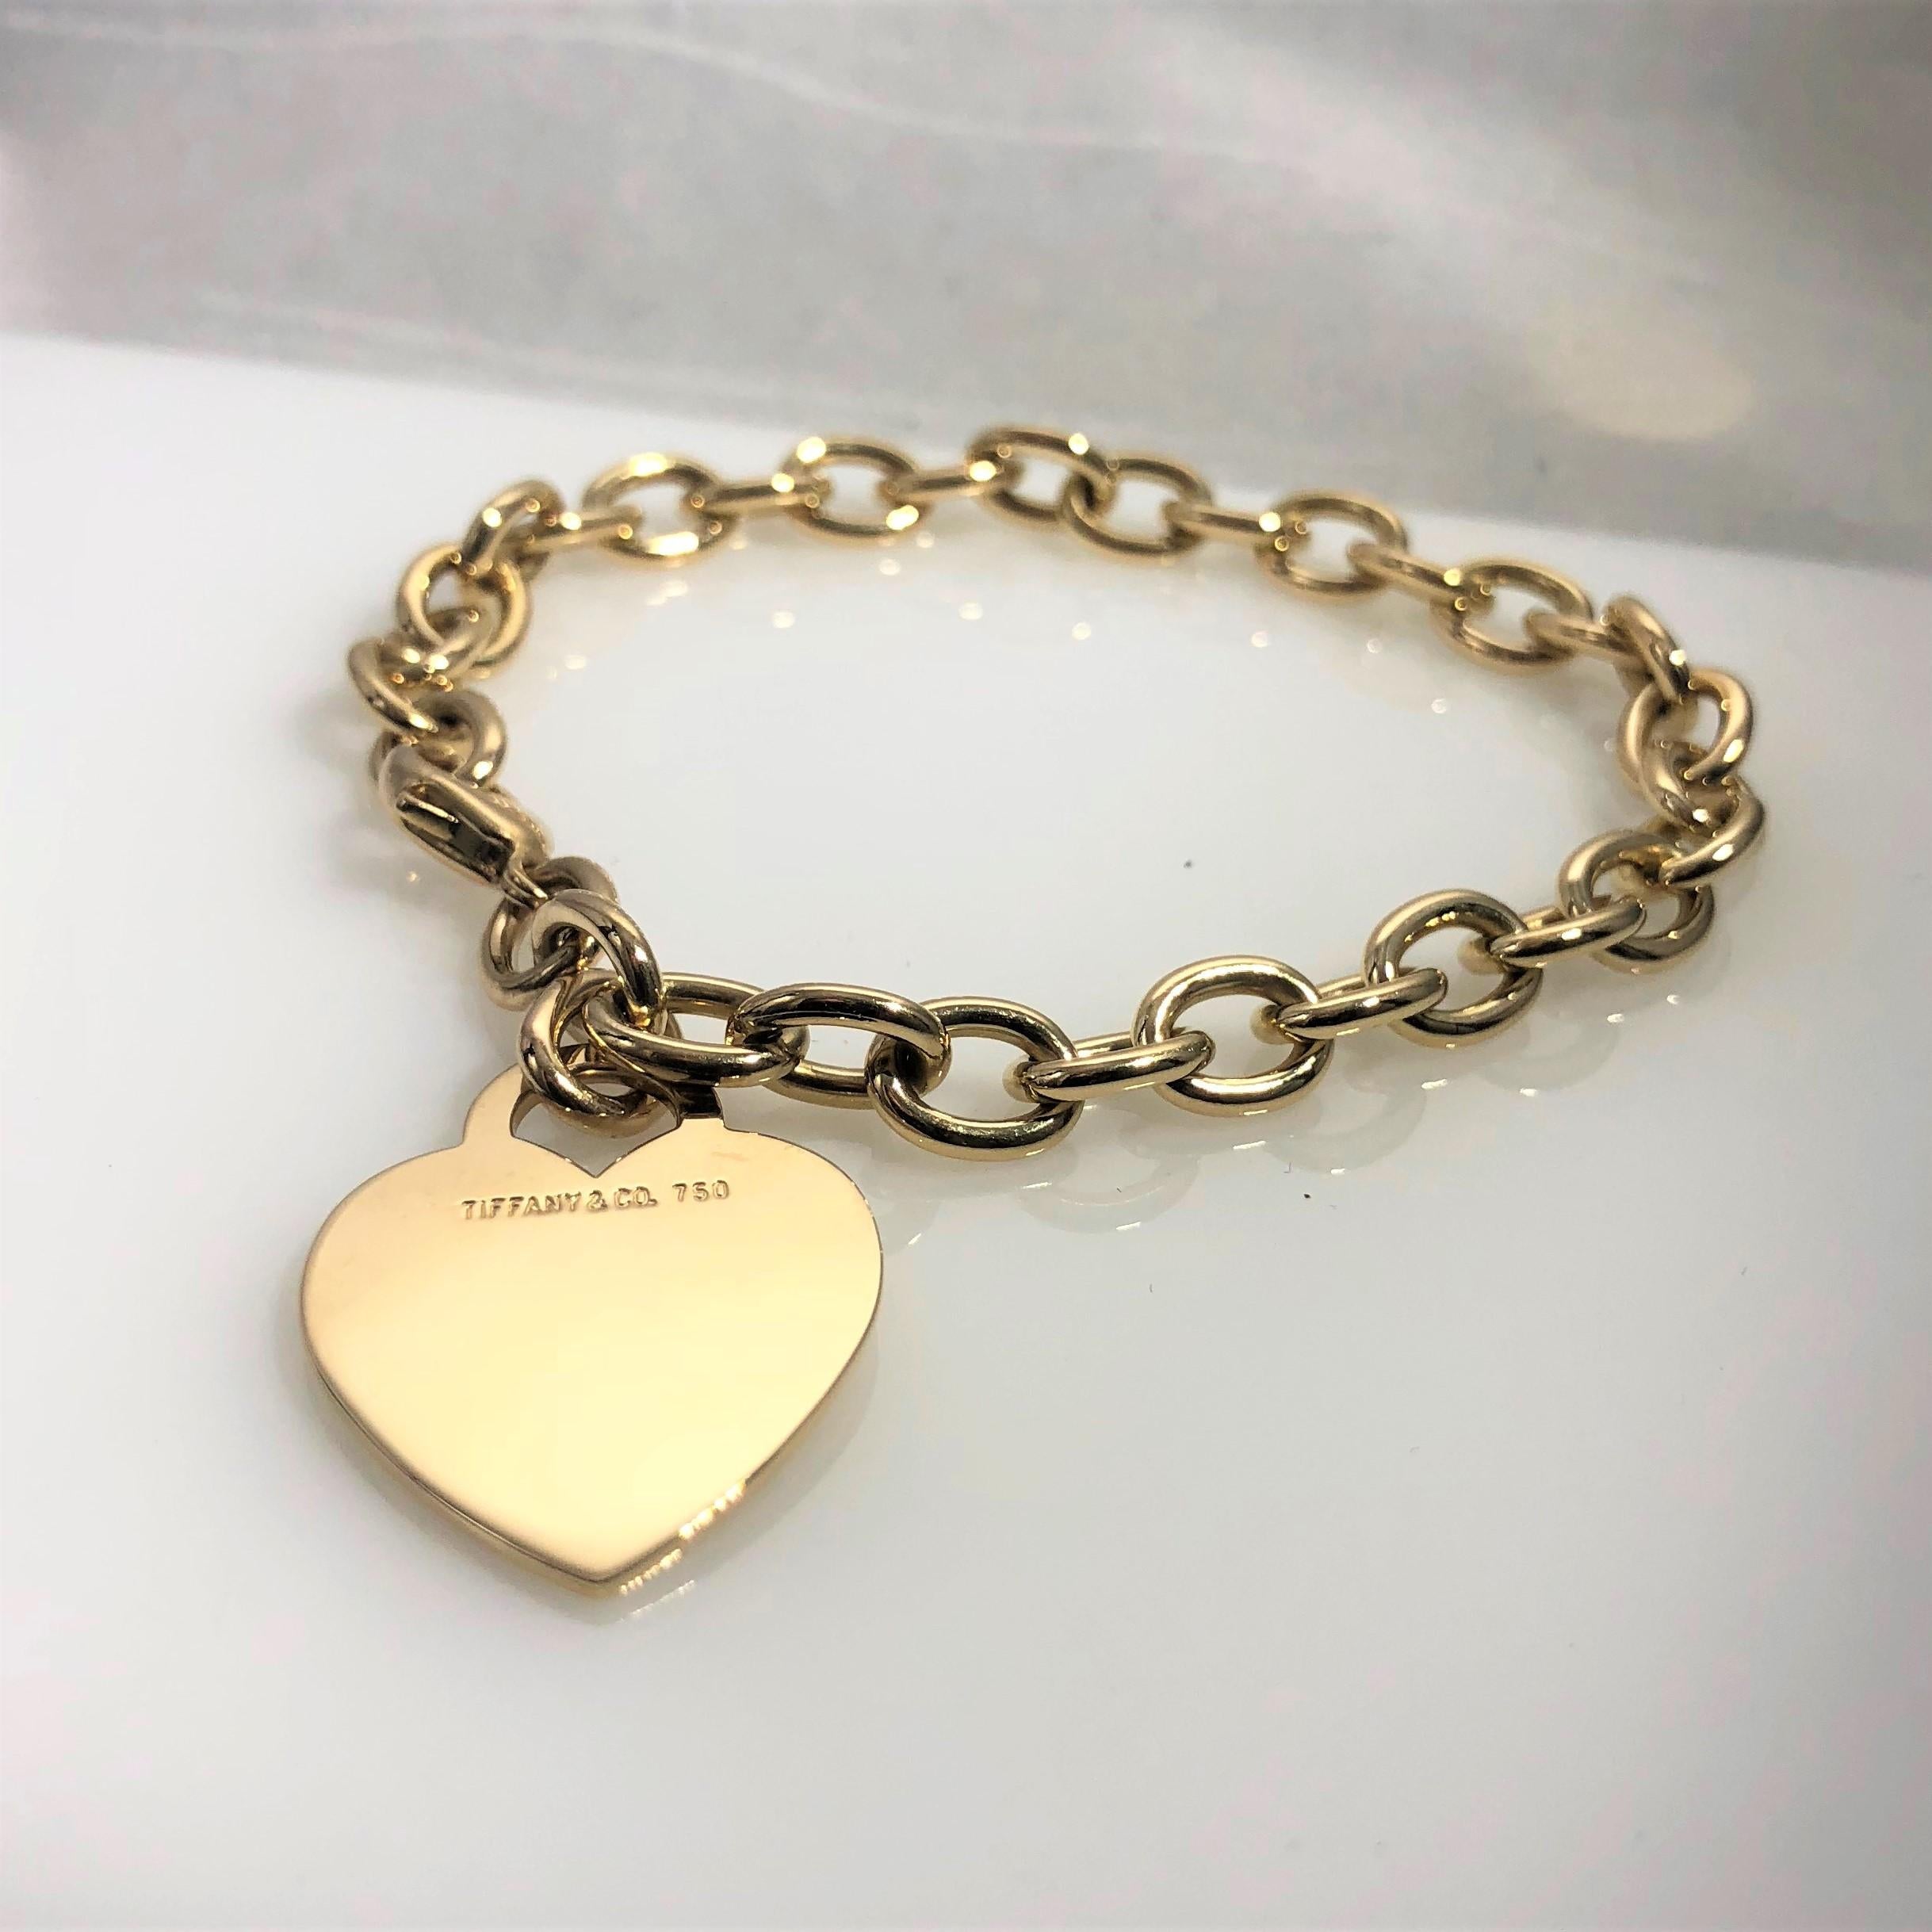 Tiffany & Co. 18 Karat Yellow Gold Heart Tag Charm Bracelet 2